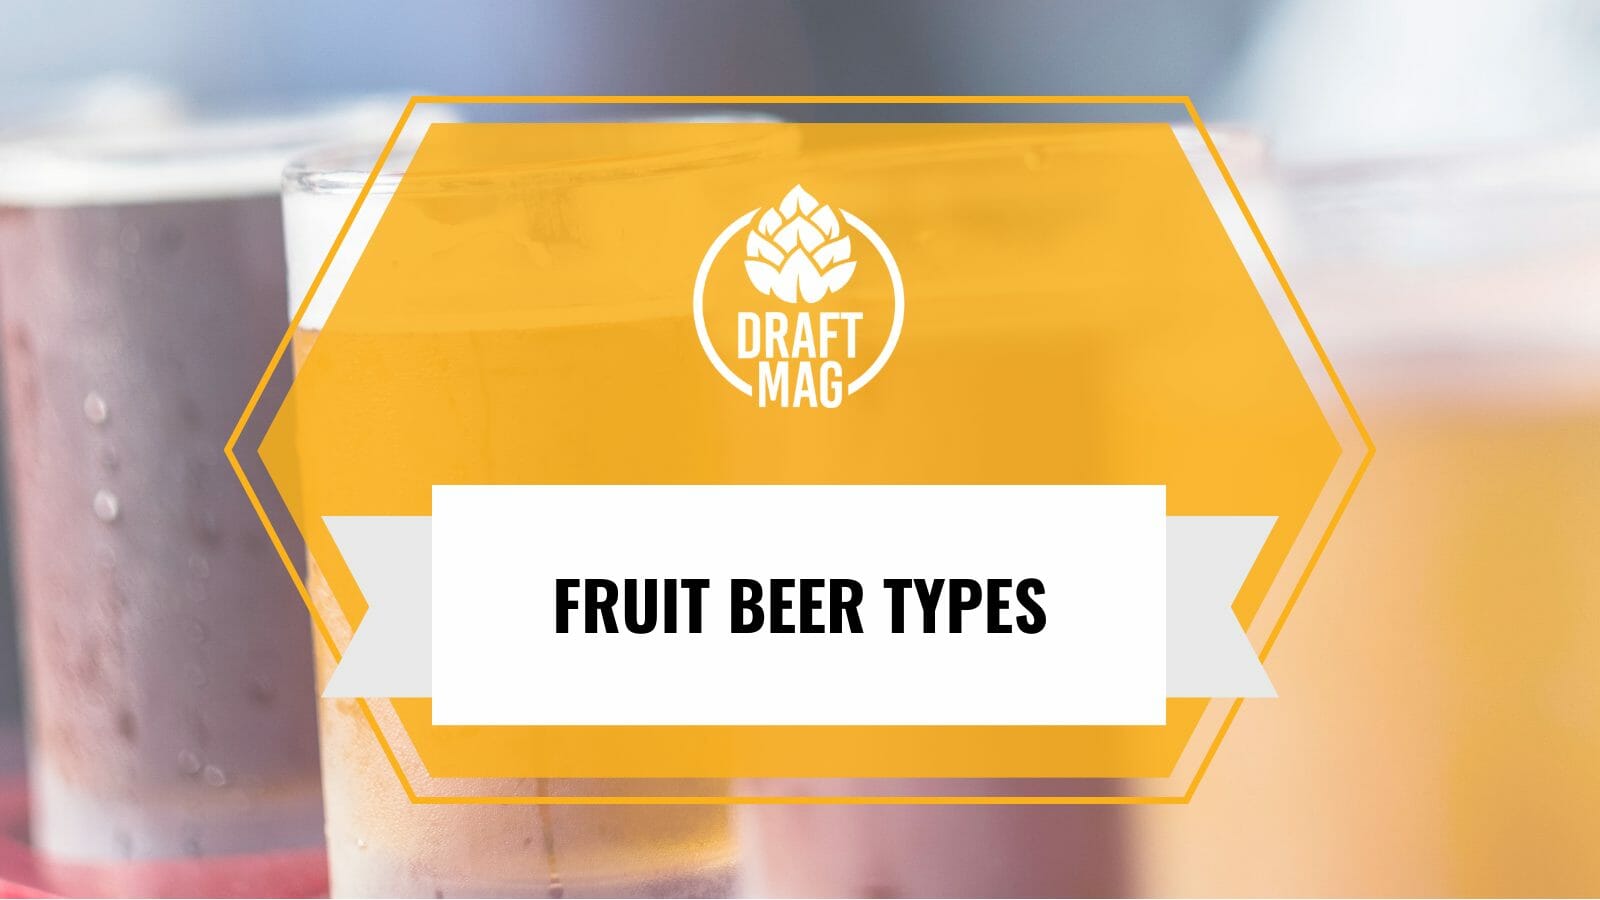 Fruit beer types